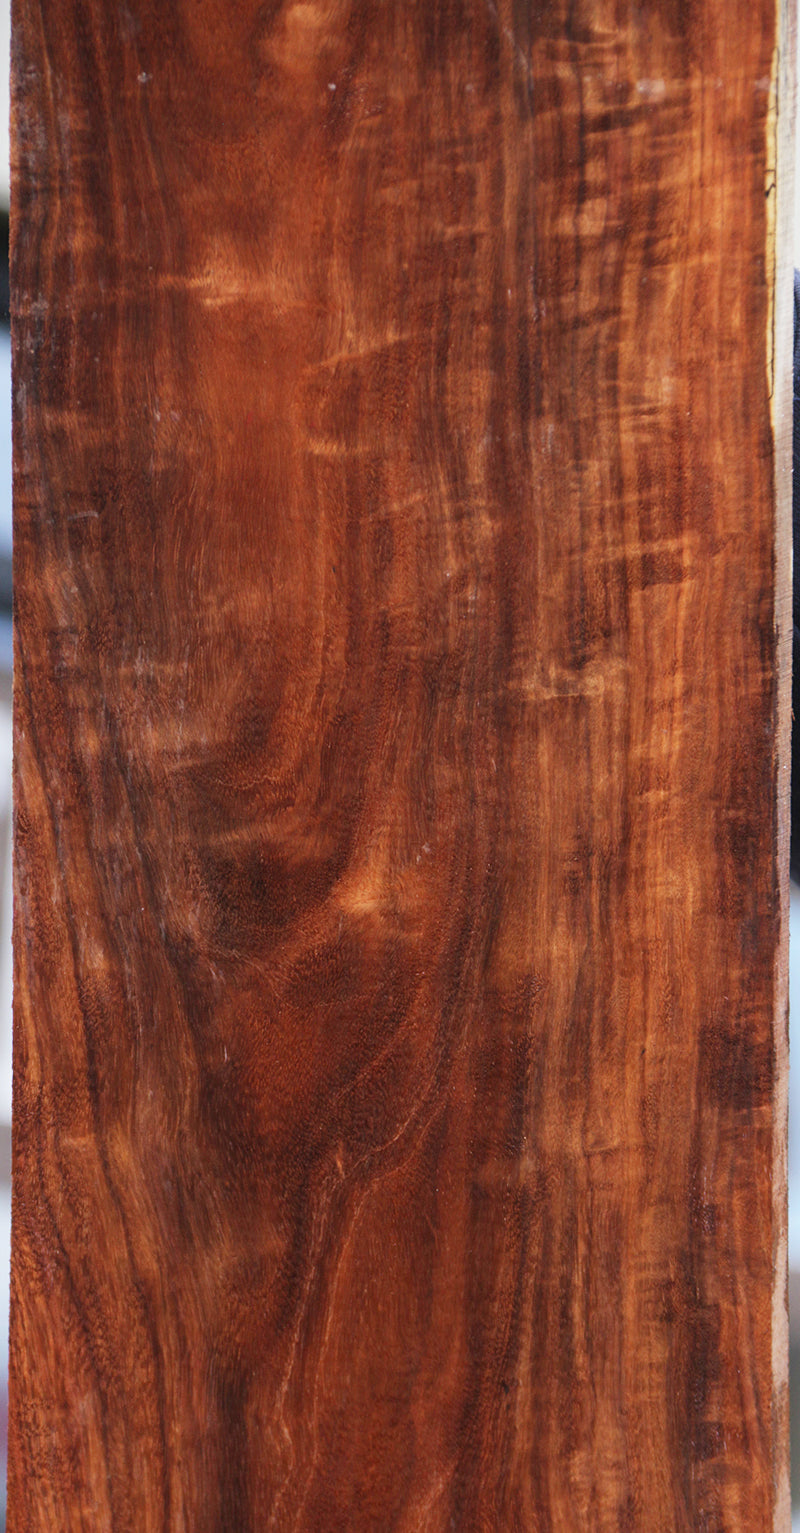 Exhibition Granadillo Lumber